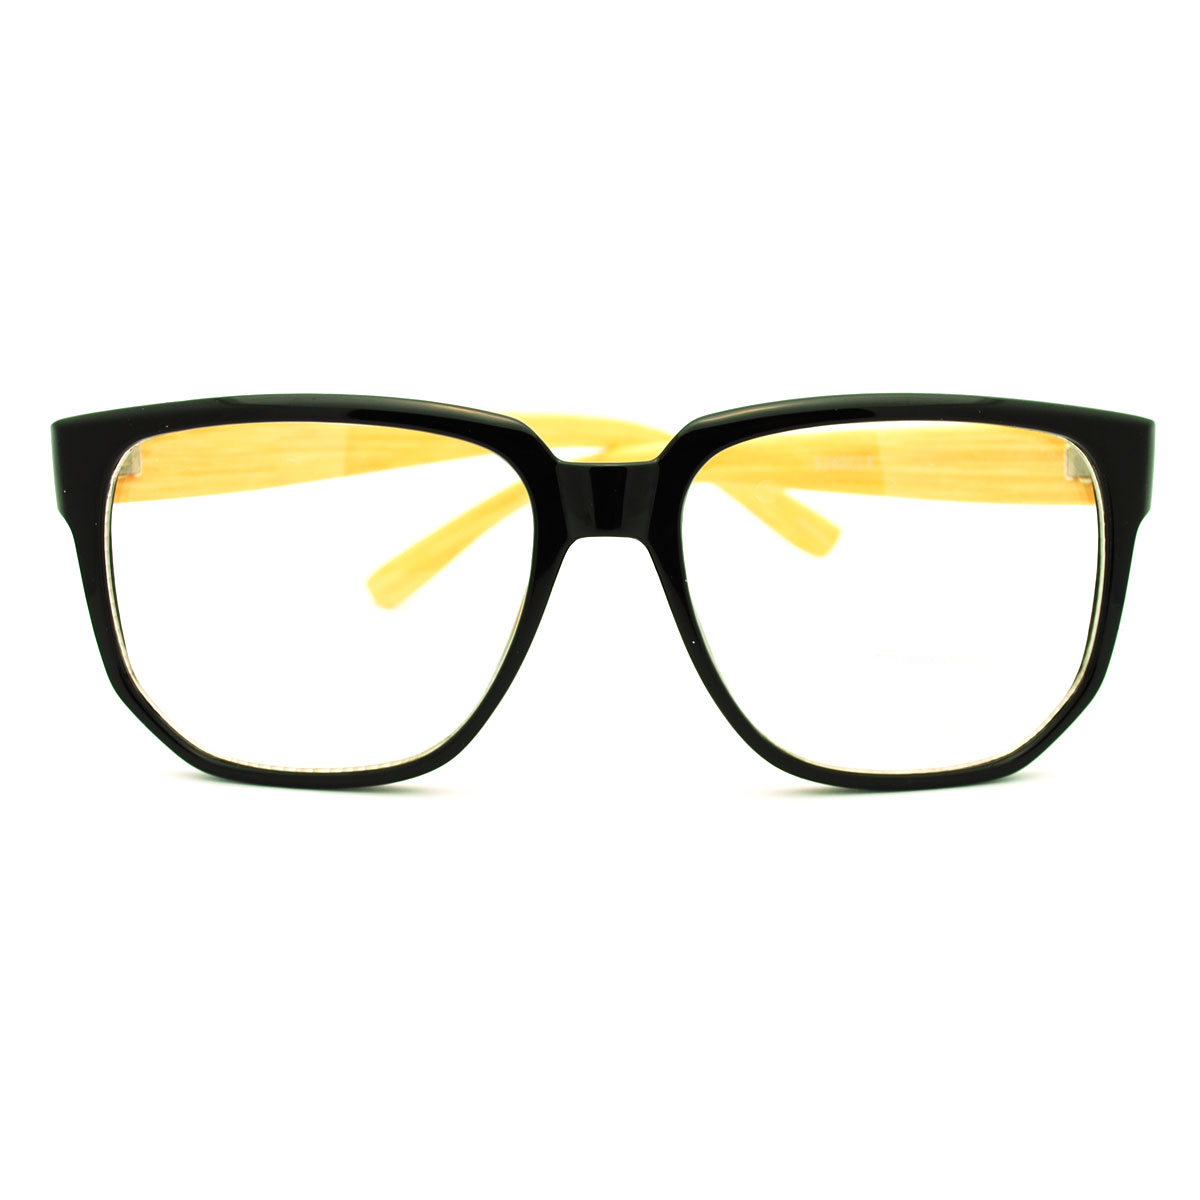 Nerdy Square Oversized Clear Lens Eye Glasses Ebay 